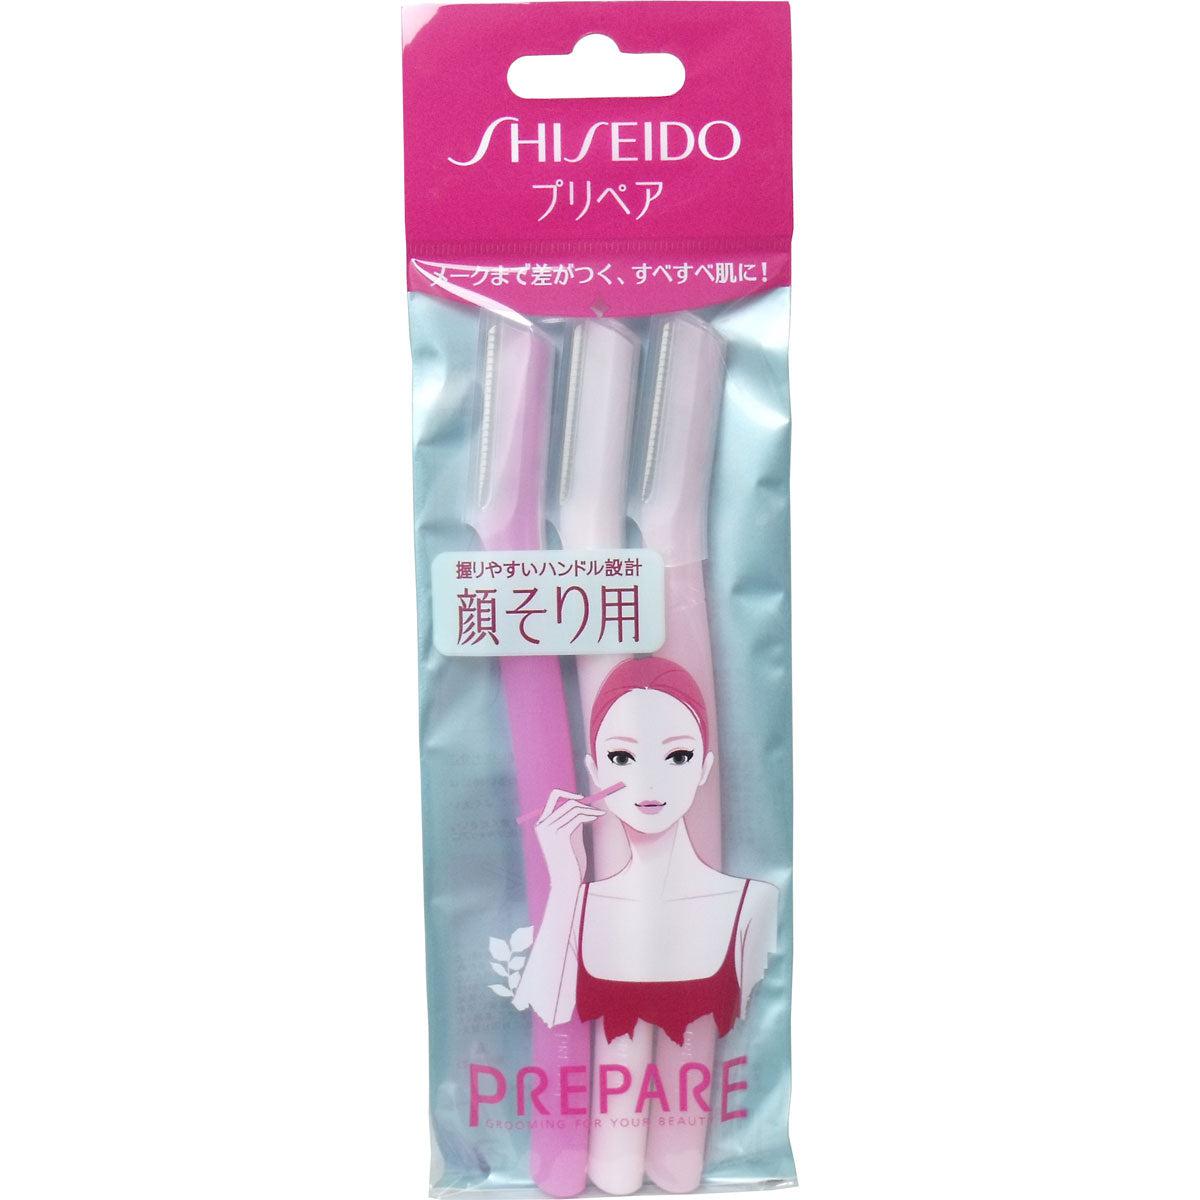 Shiseido Prepare Facial Razor L 3 Razors